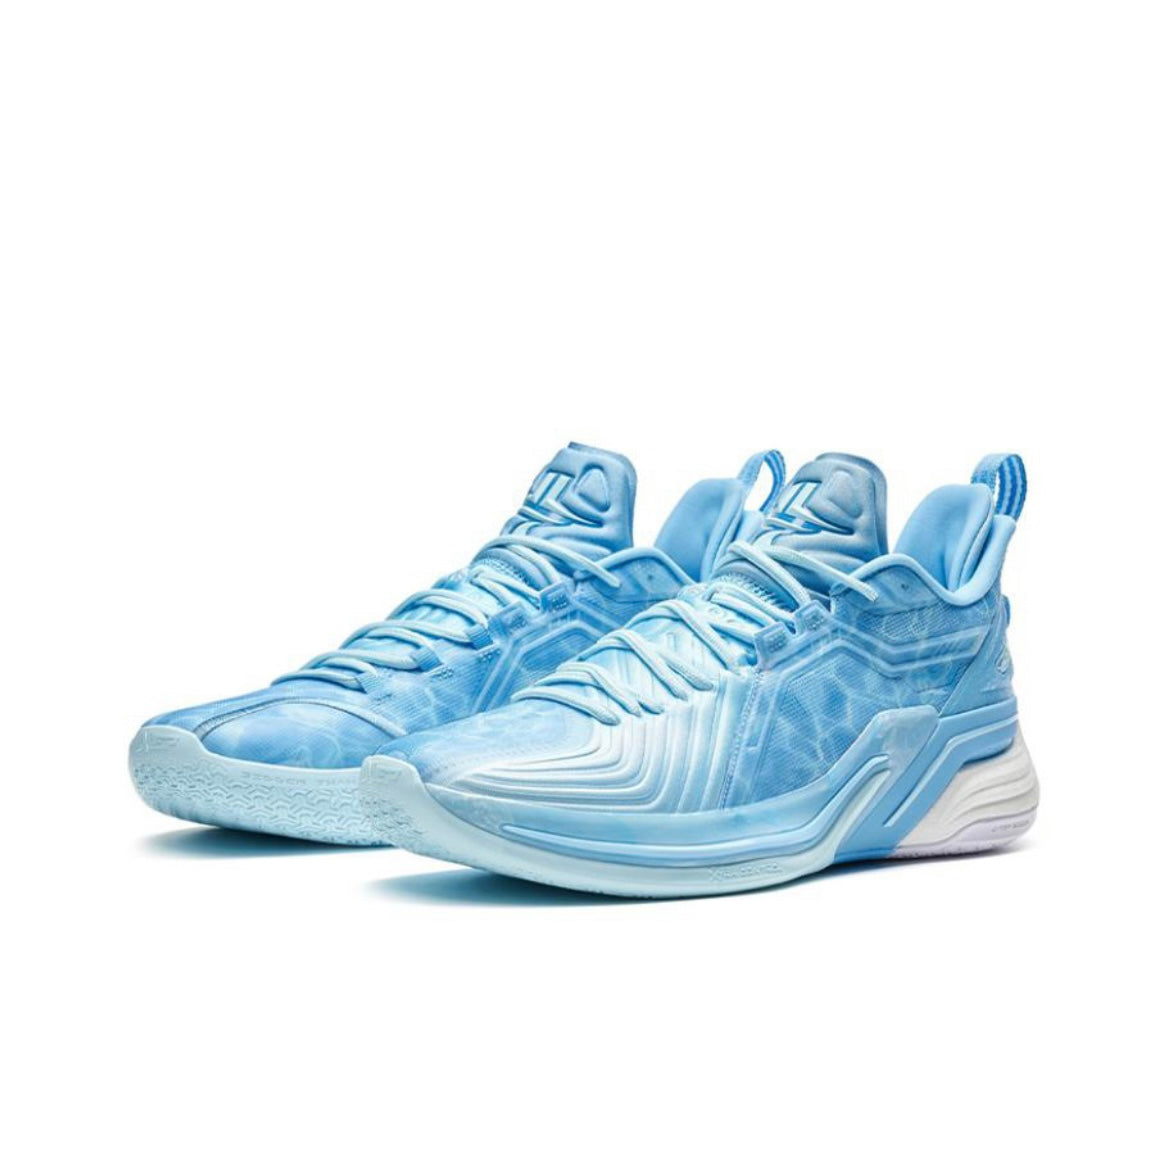 Xtep Jeremy Lin Generation “ 豪友对决” Sports Basketball Shoes